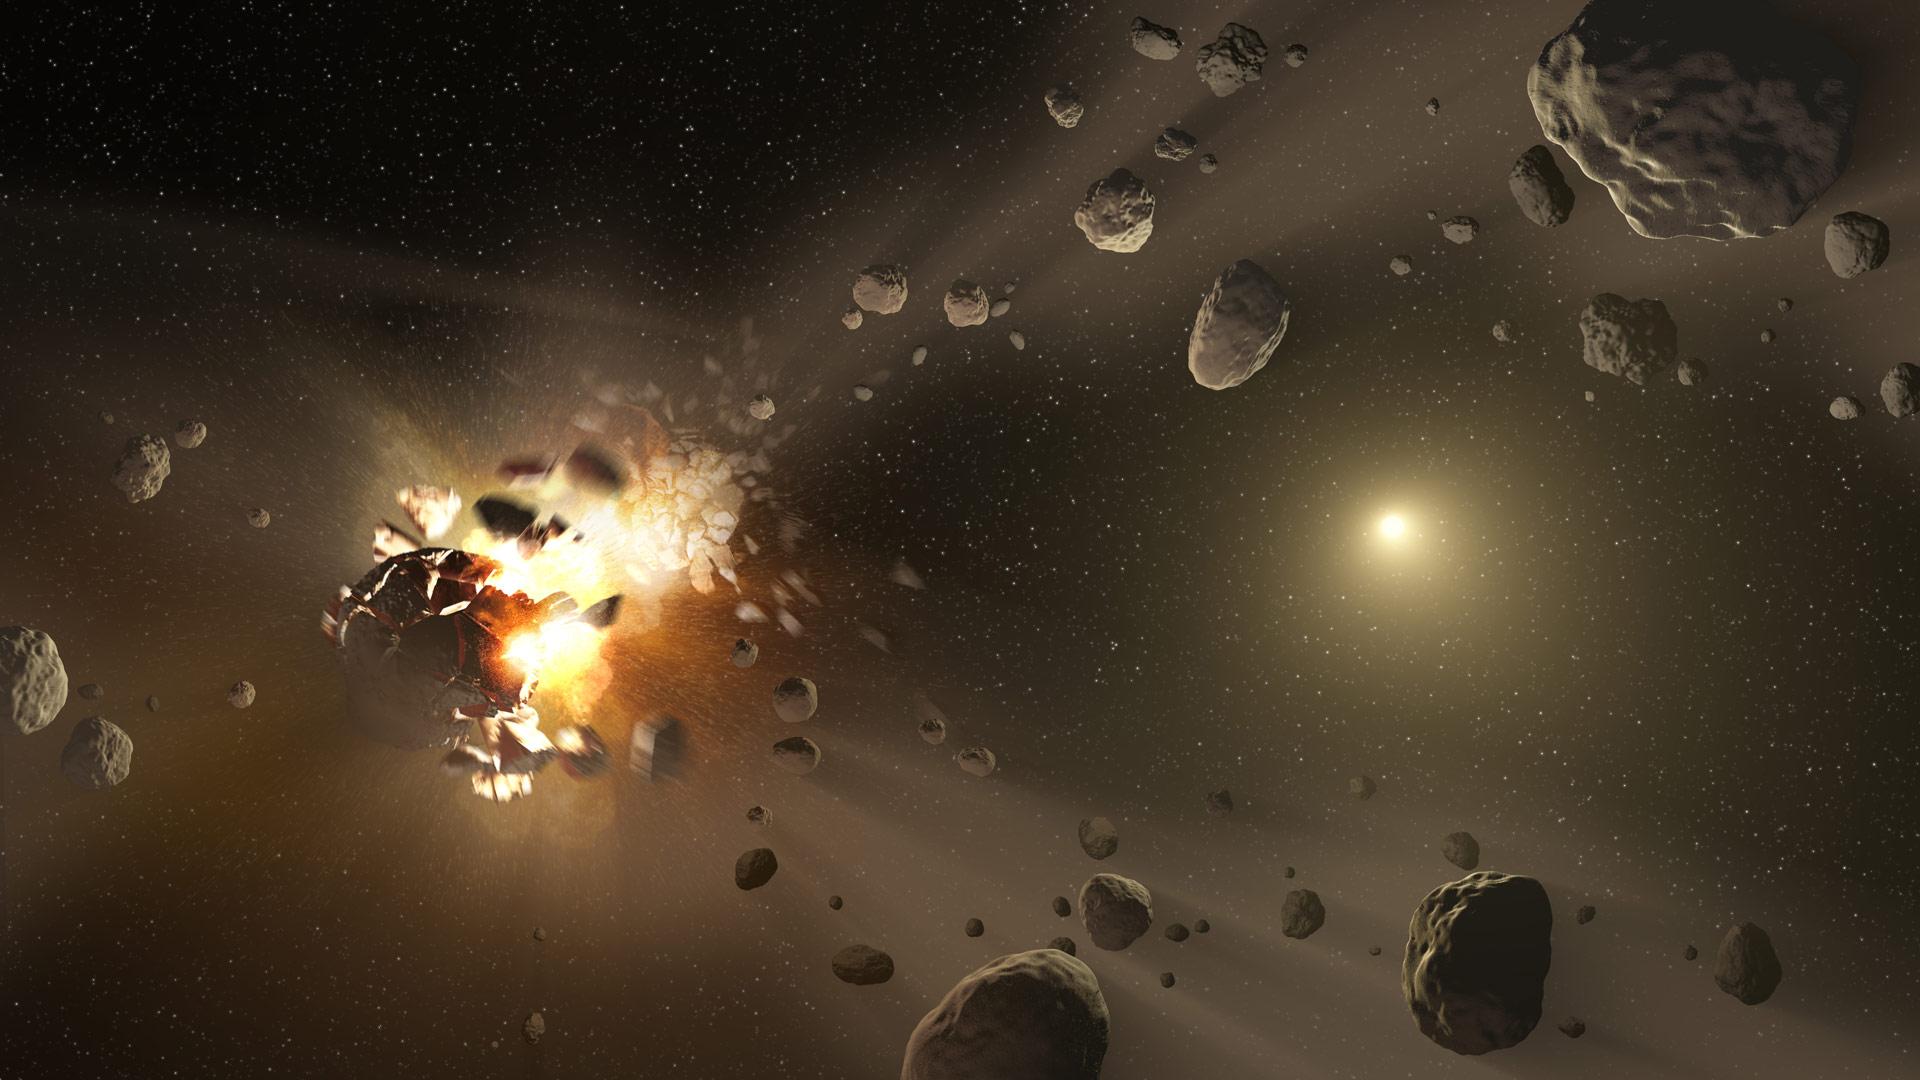 Asteroid Belt Between Mars And Jupit HD Wallpaper, Background Image